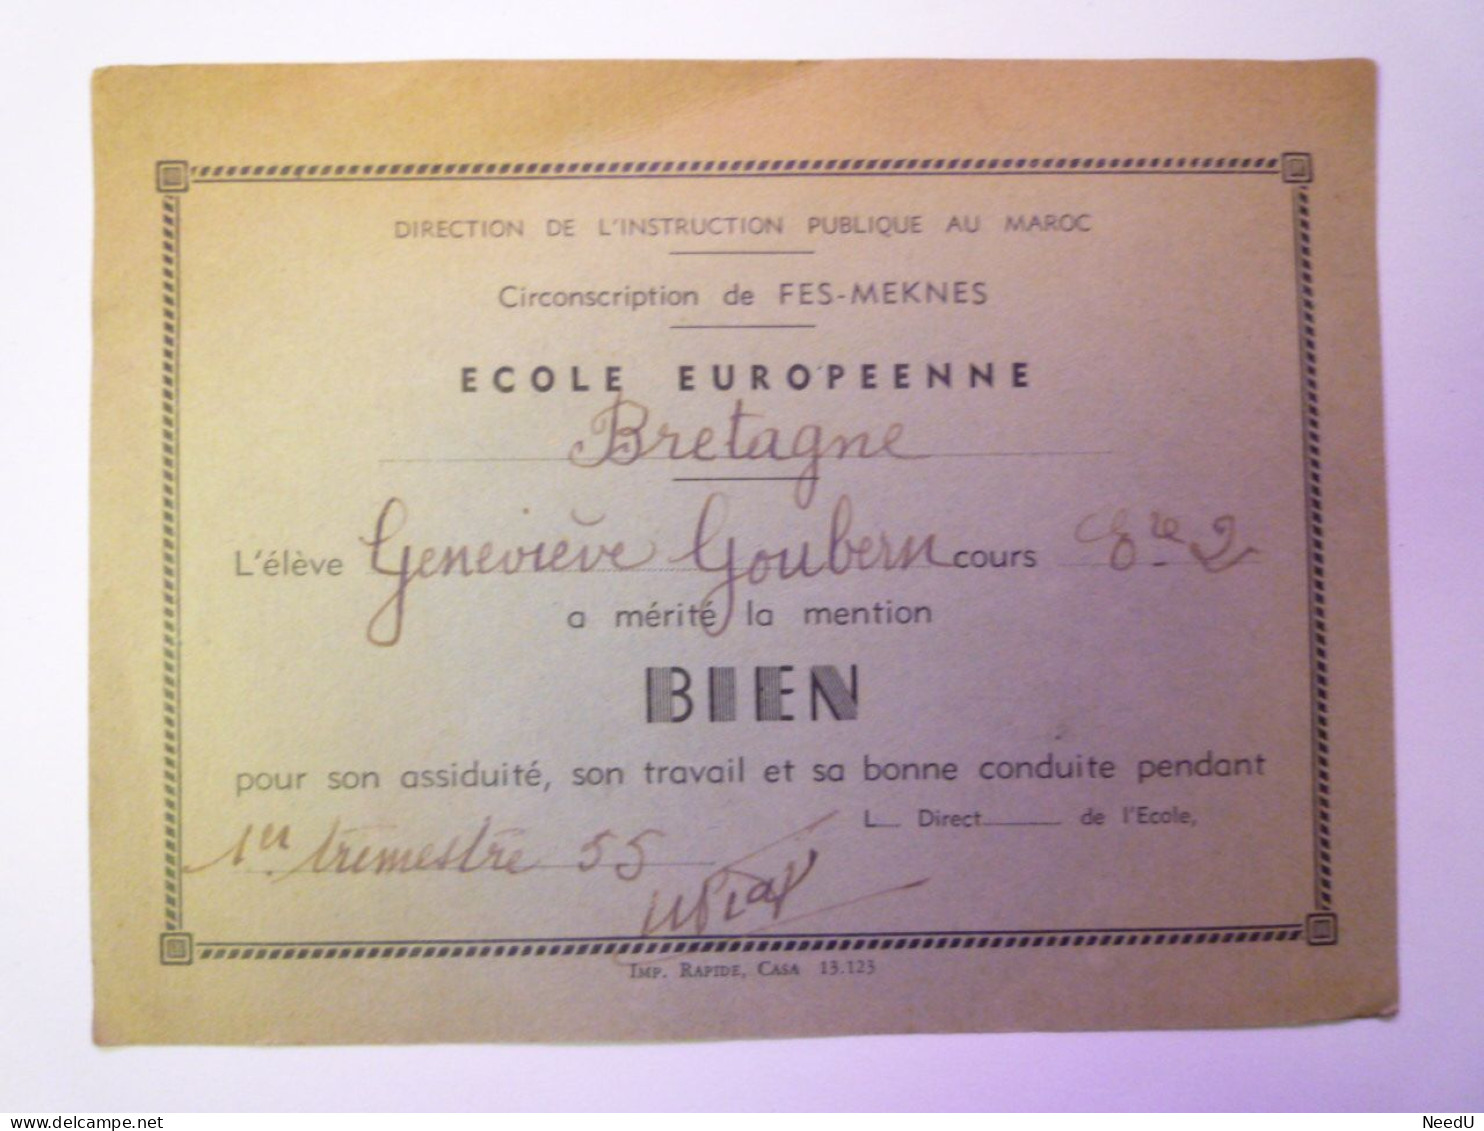 GP 2024 - 4  ECOLE EUROPEENNE  "BRETAGNE"  (Maroc  -  FES-MEKNES)  MENTION BIEN  1955   XXX - Diploma & School Reports